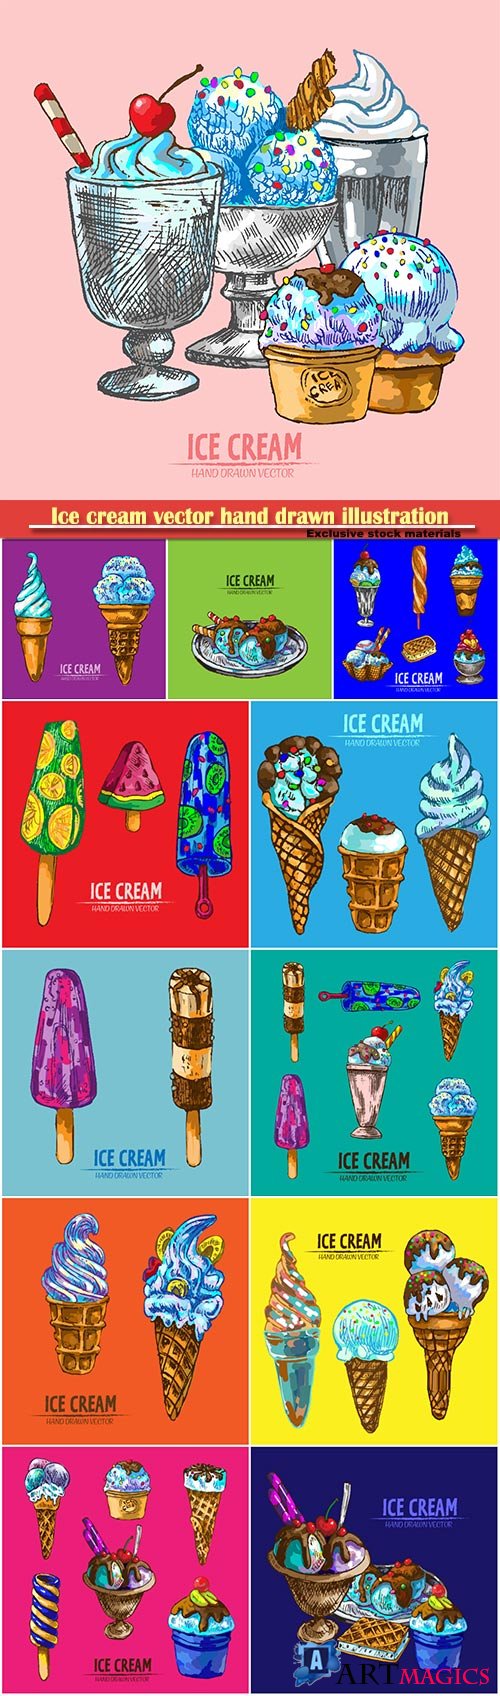 Ice cream vector hand drawn retro illustration collection set